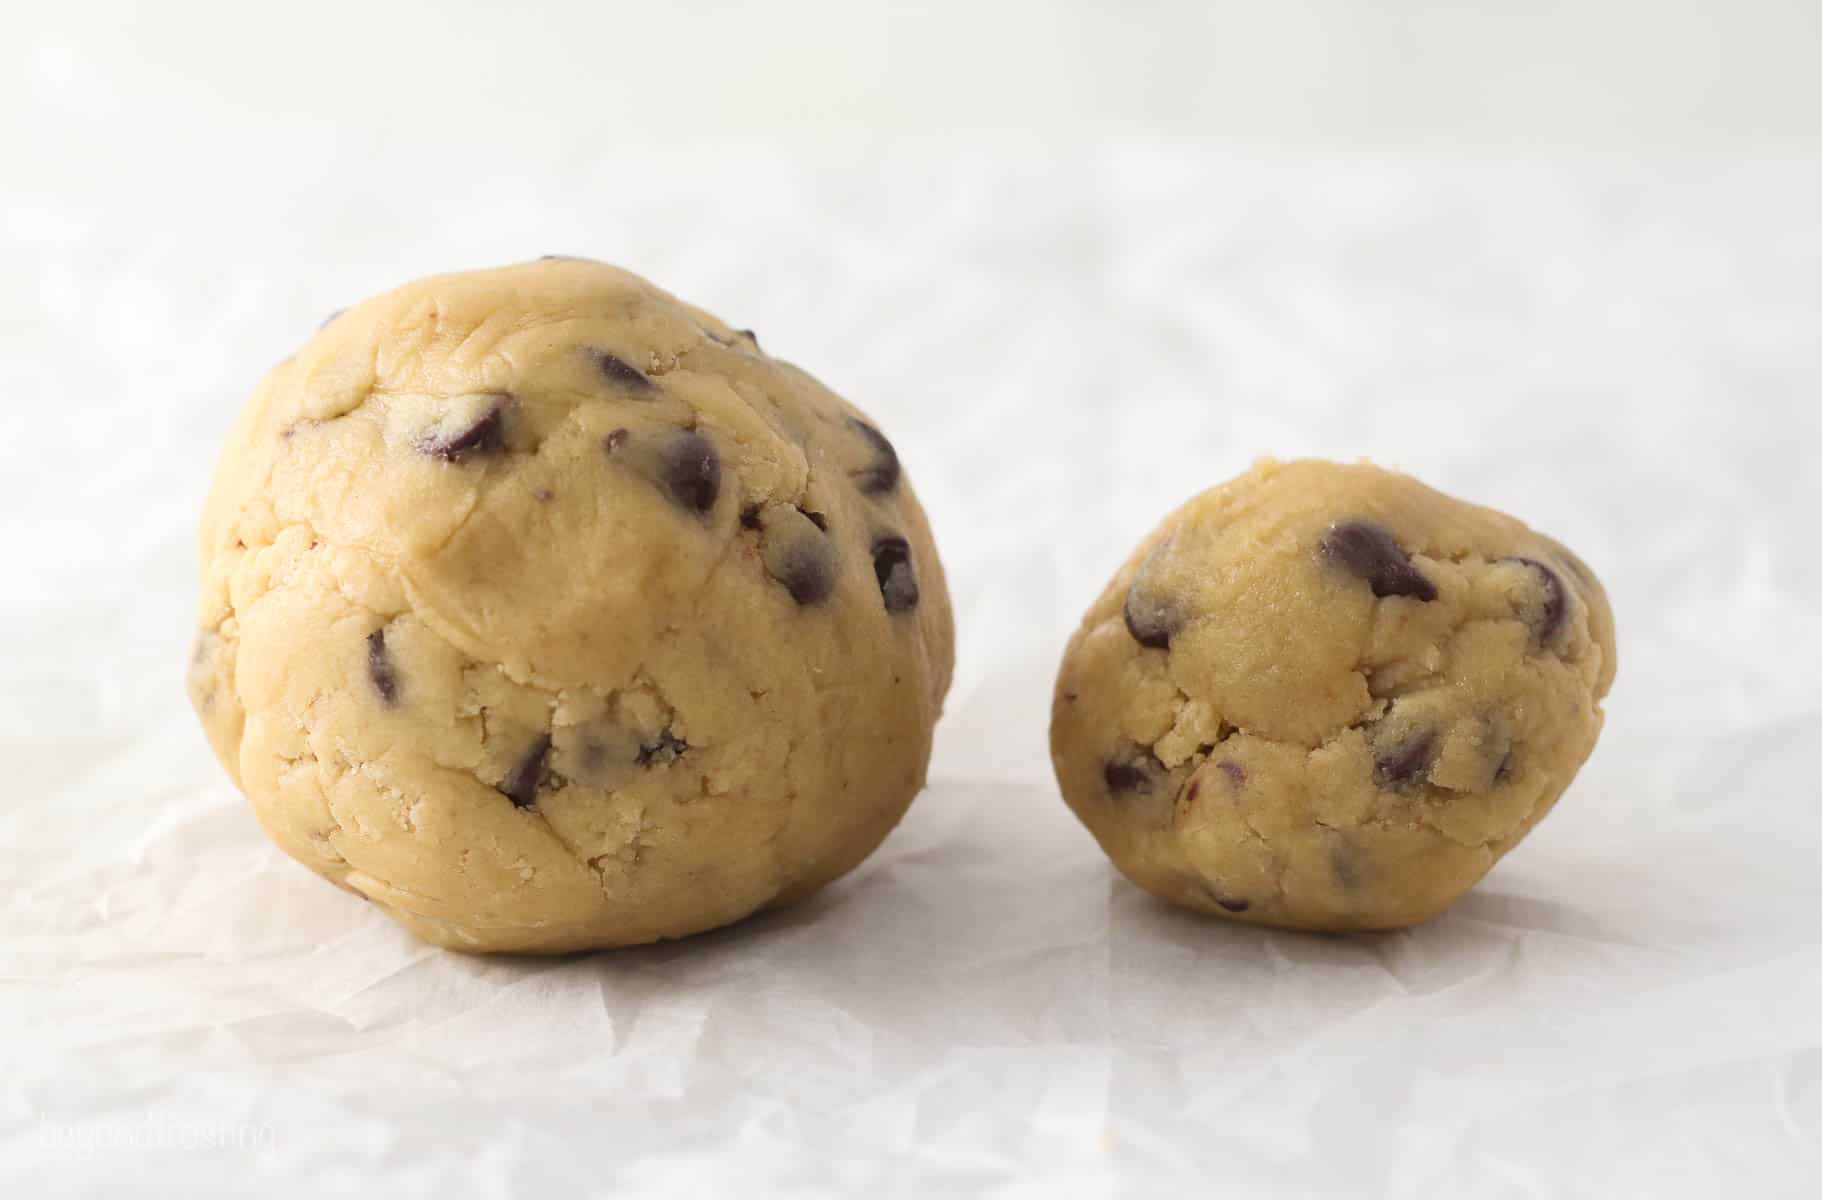 A large ball of cookie dough next to a regular sized ball of cookie dough